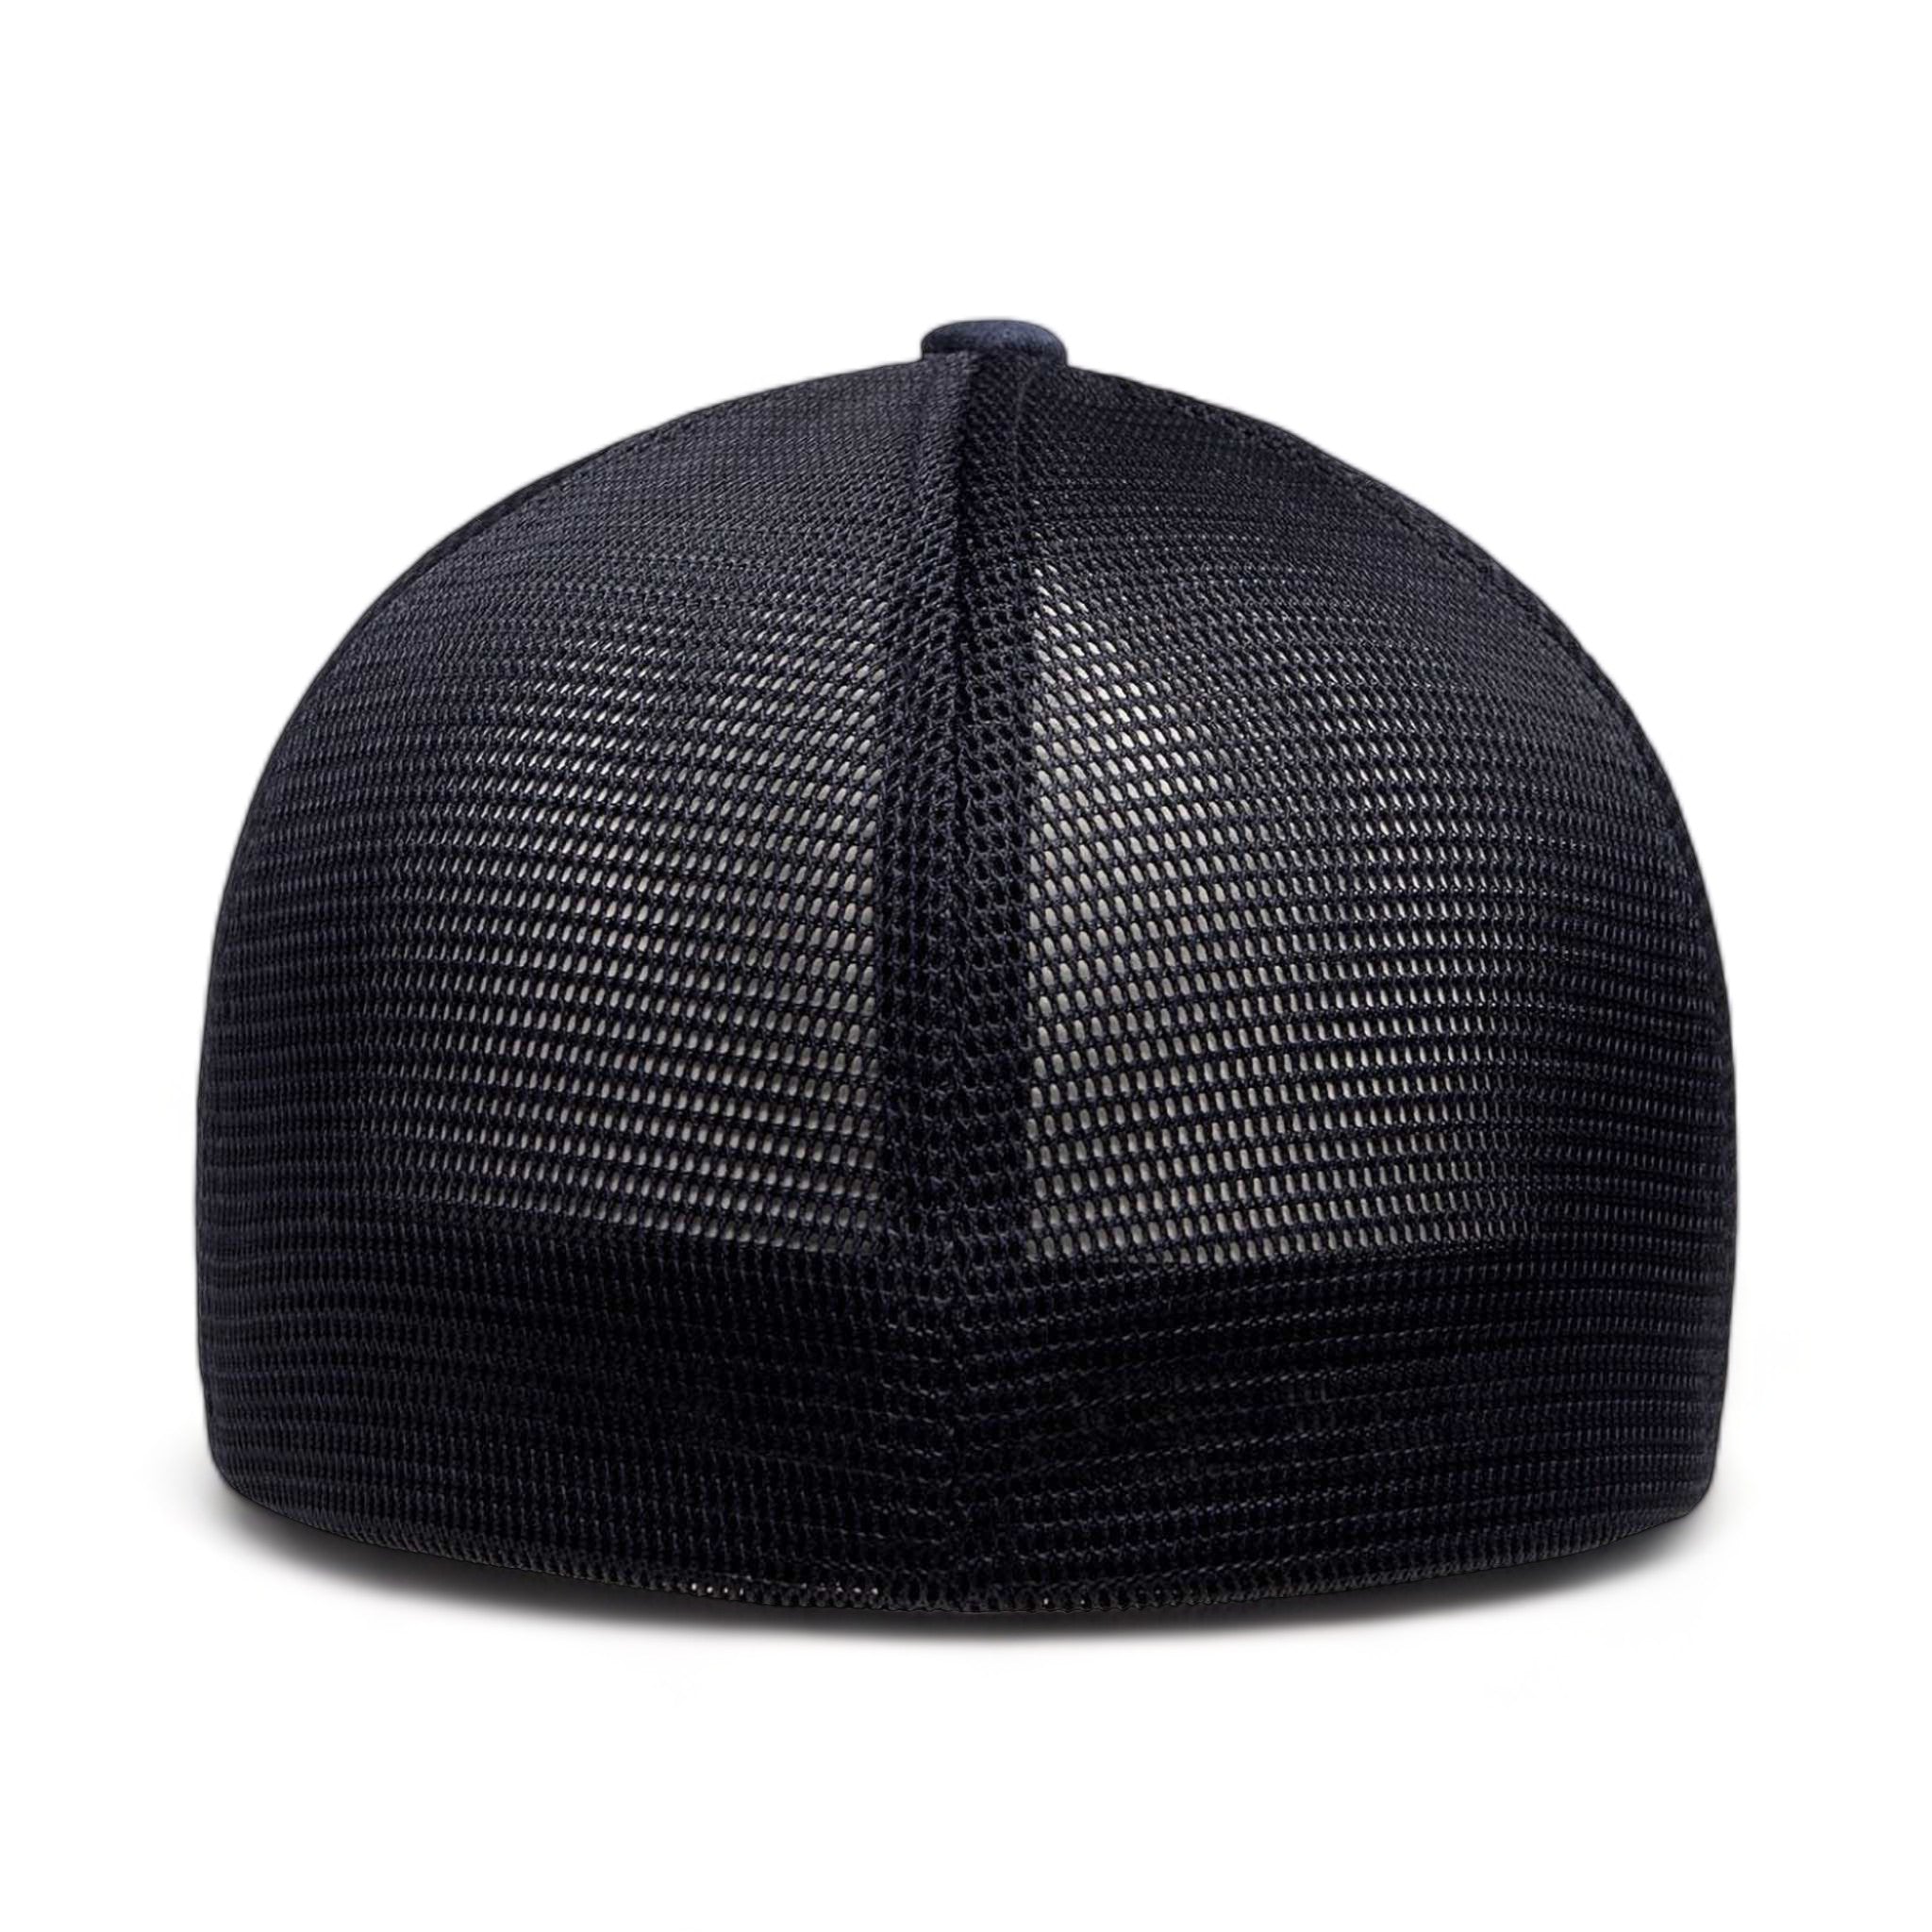 Back view of Flexfit 5511UP custom hat in mélange navy